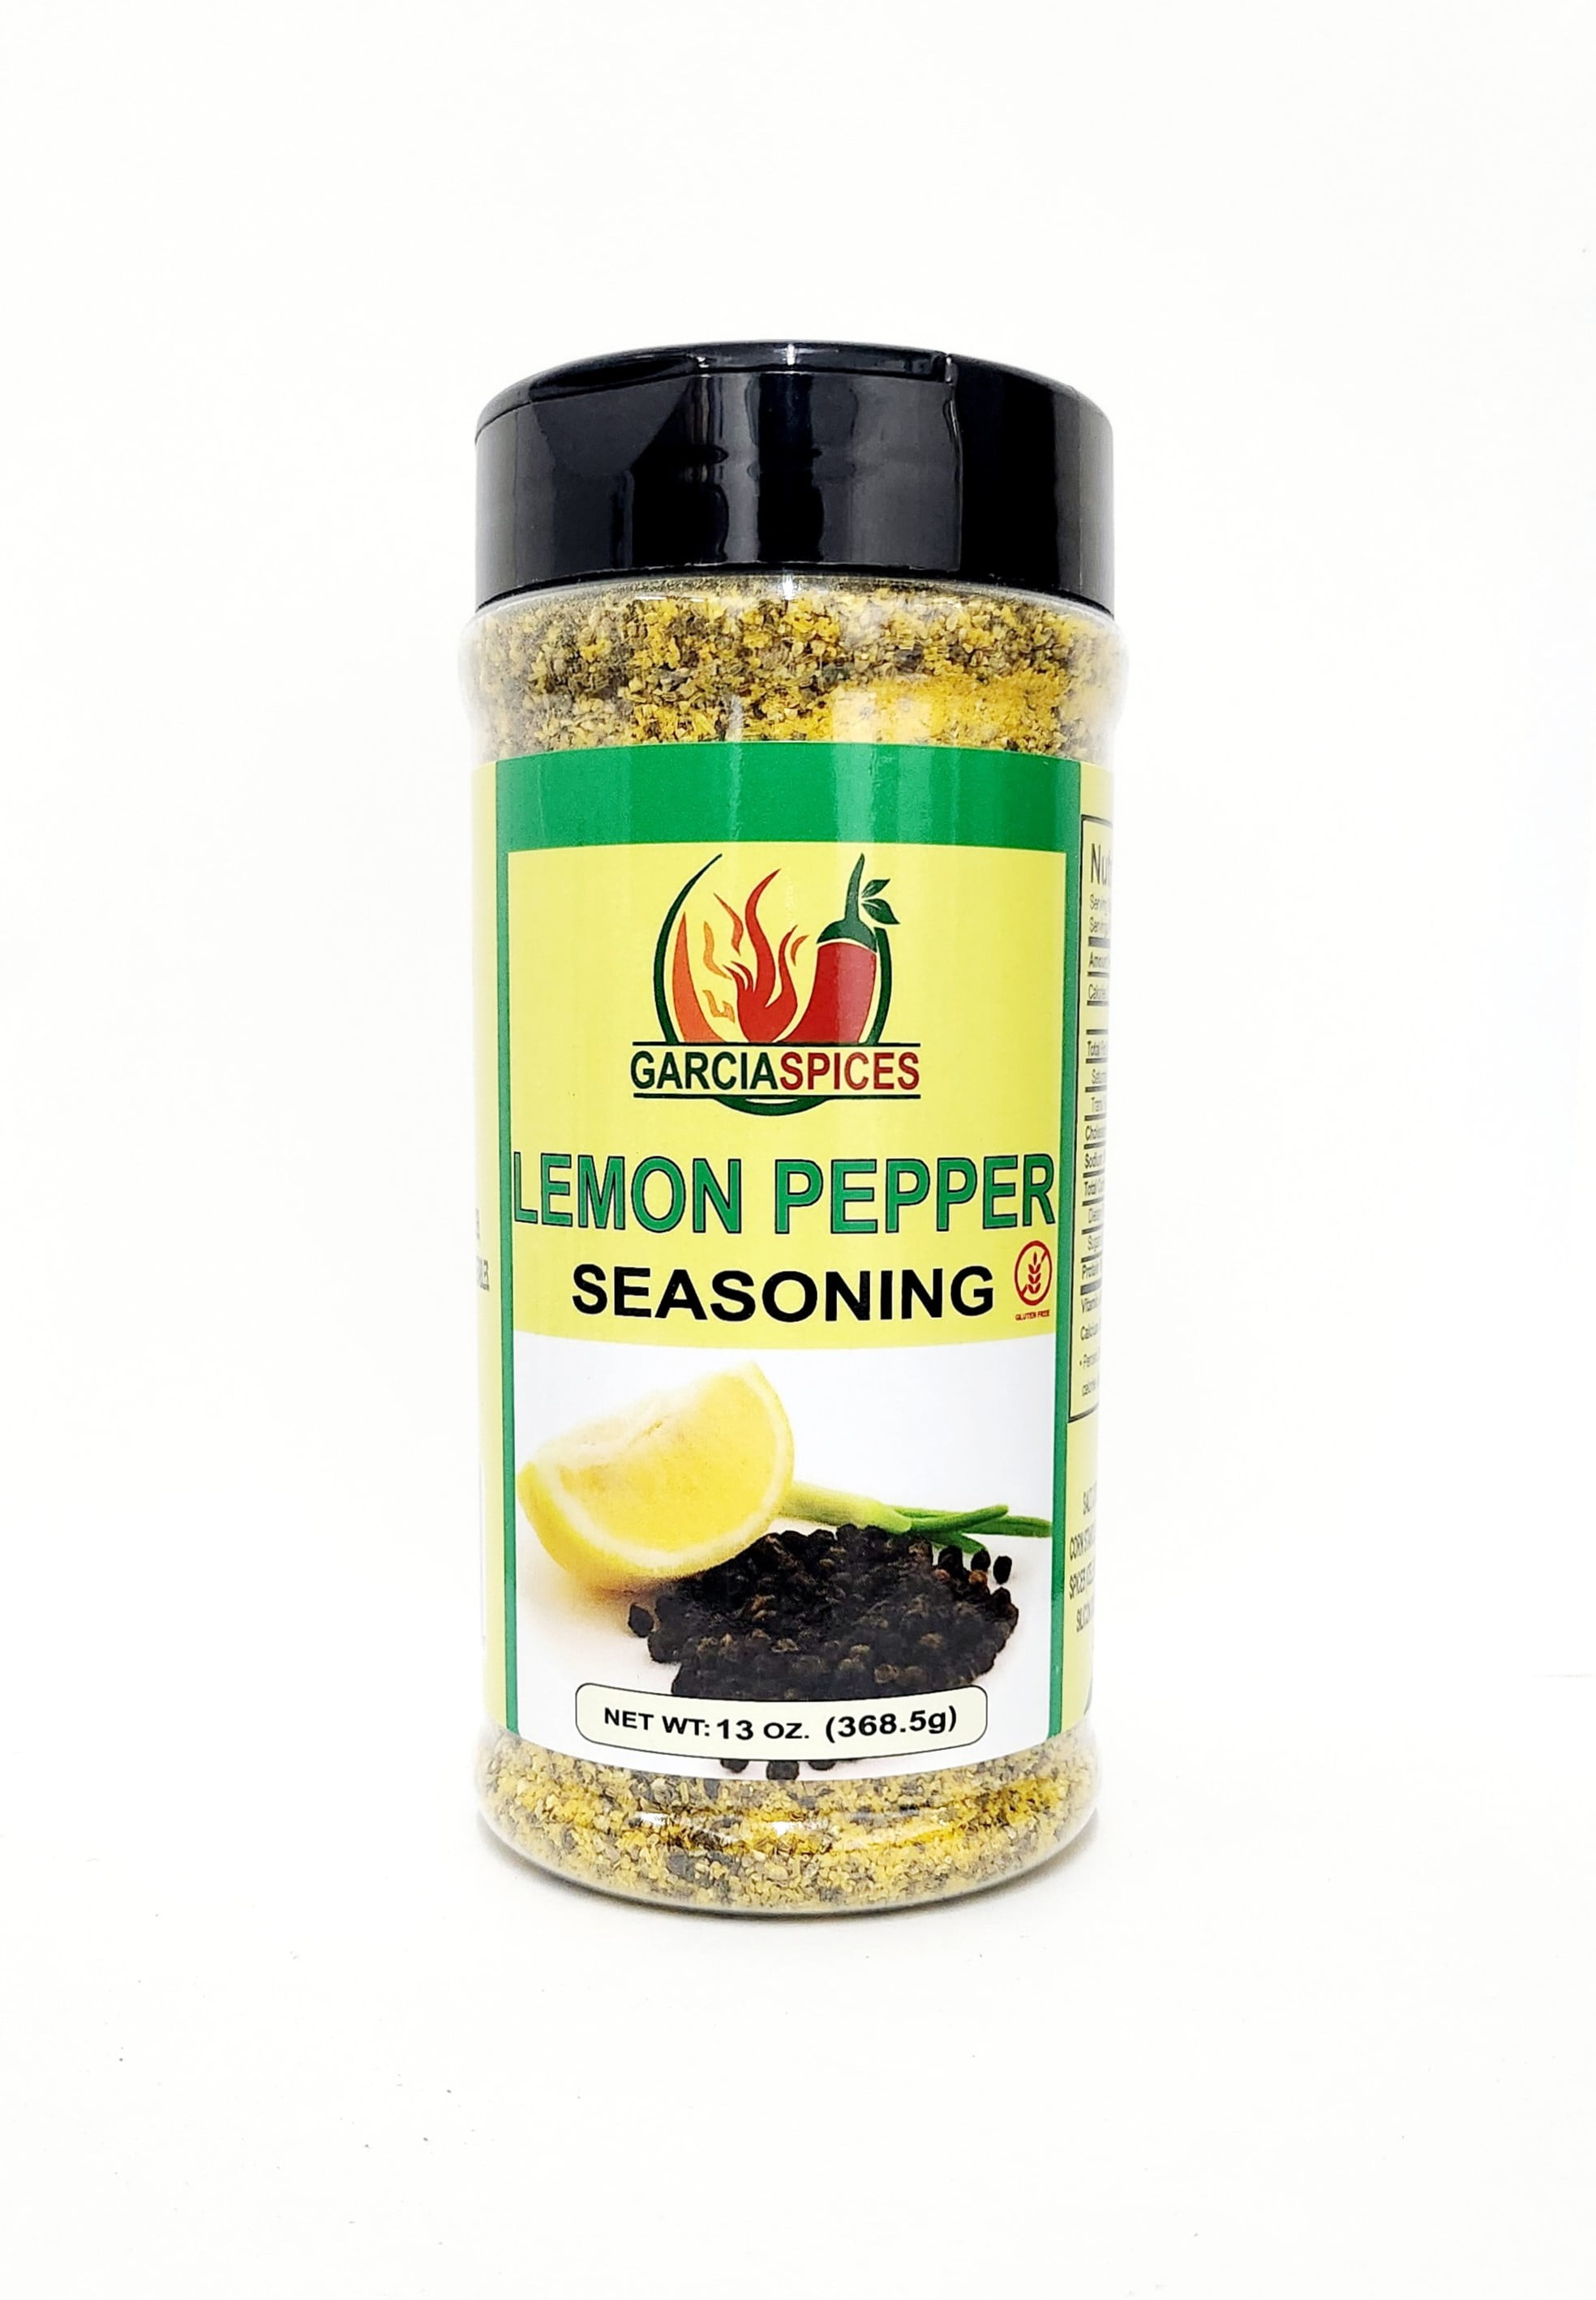 Kinder's No Salt Lemon Pepper Seasoning - 2.6 oz